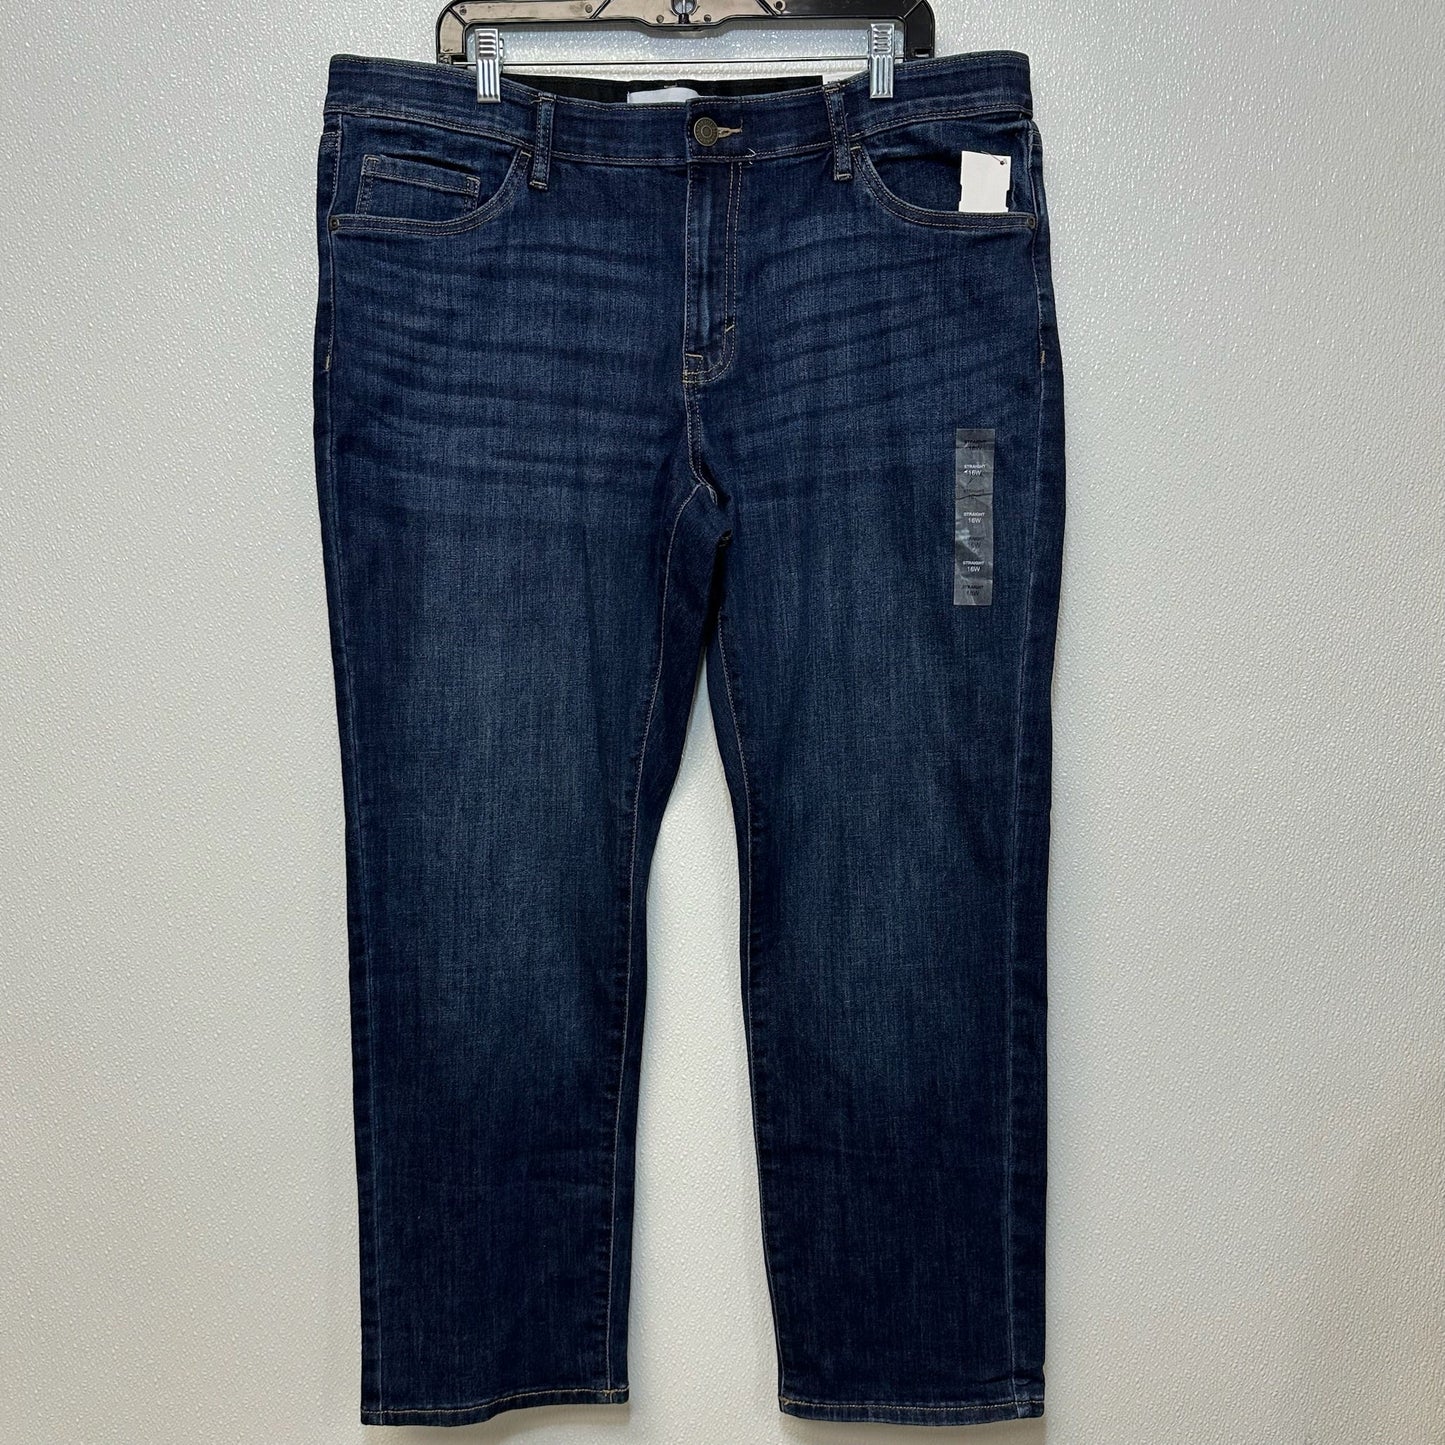 Denim Jeans Boot Cut Sonoma O, Size 16